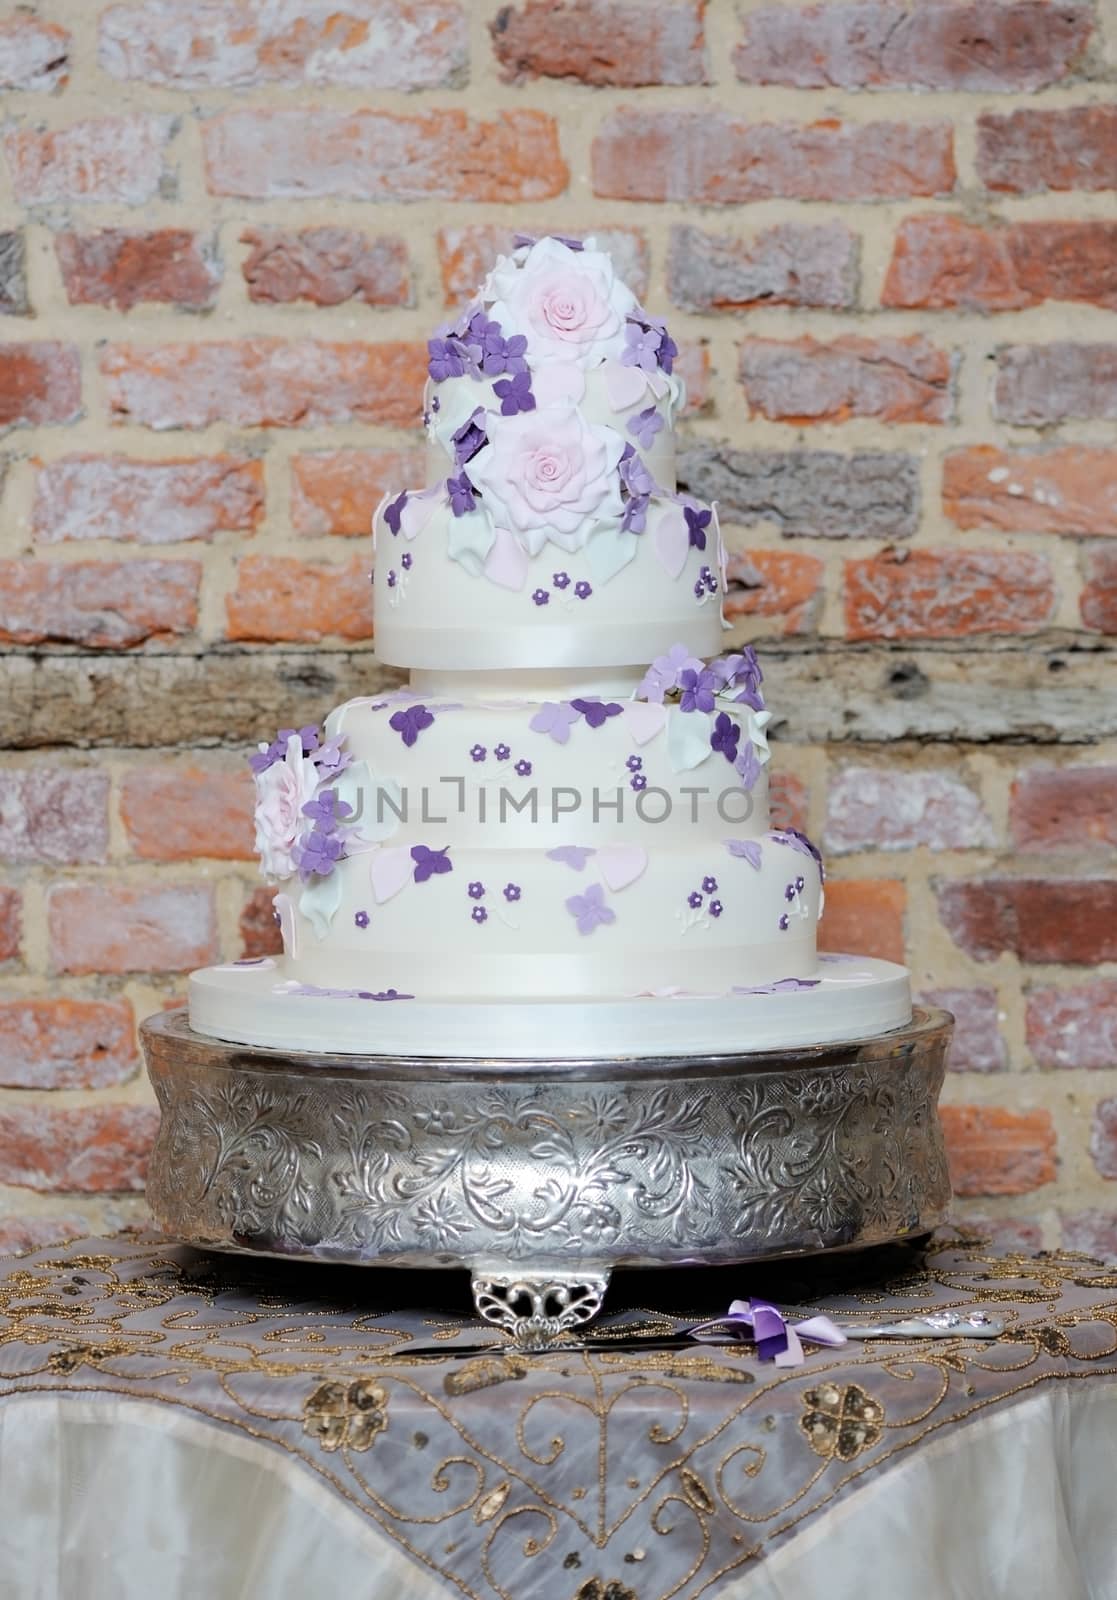 Wedding cake ornate by kmwphotography